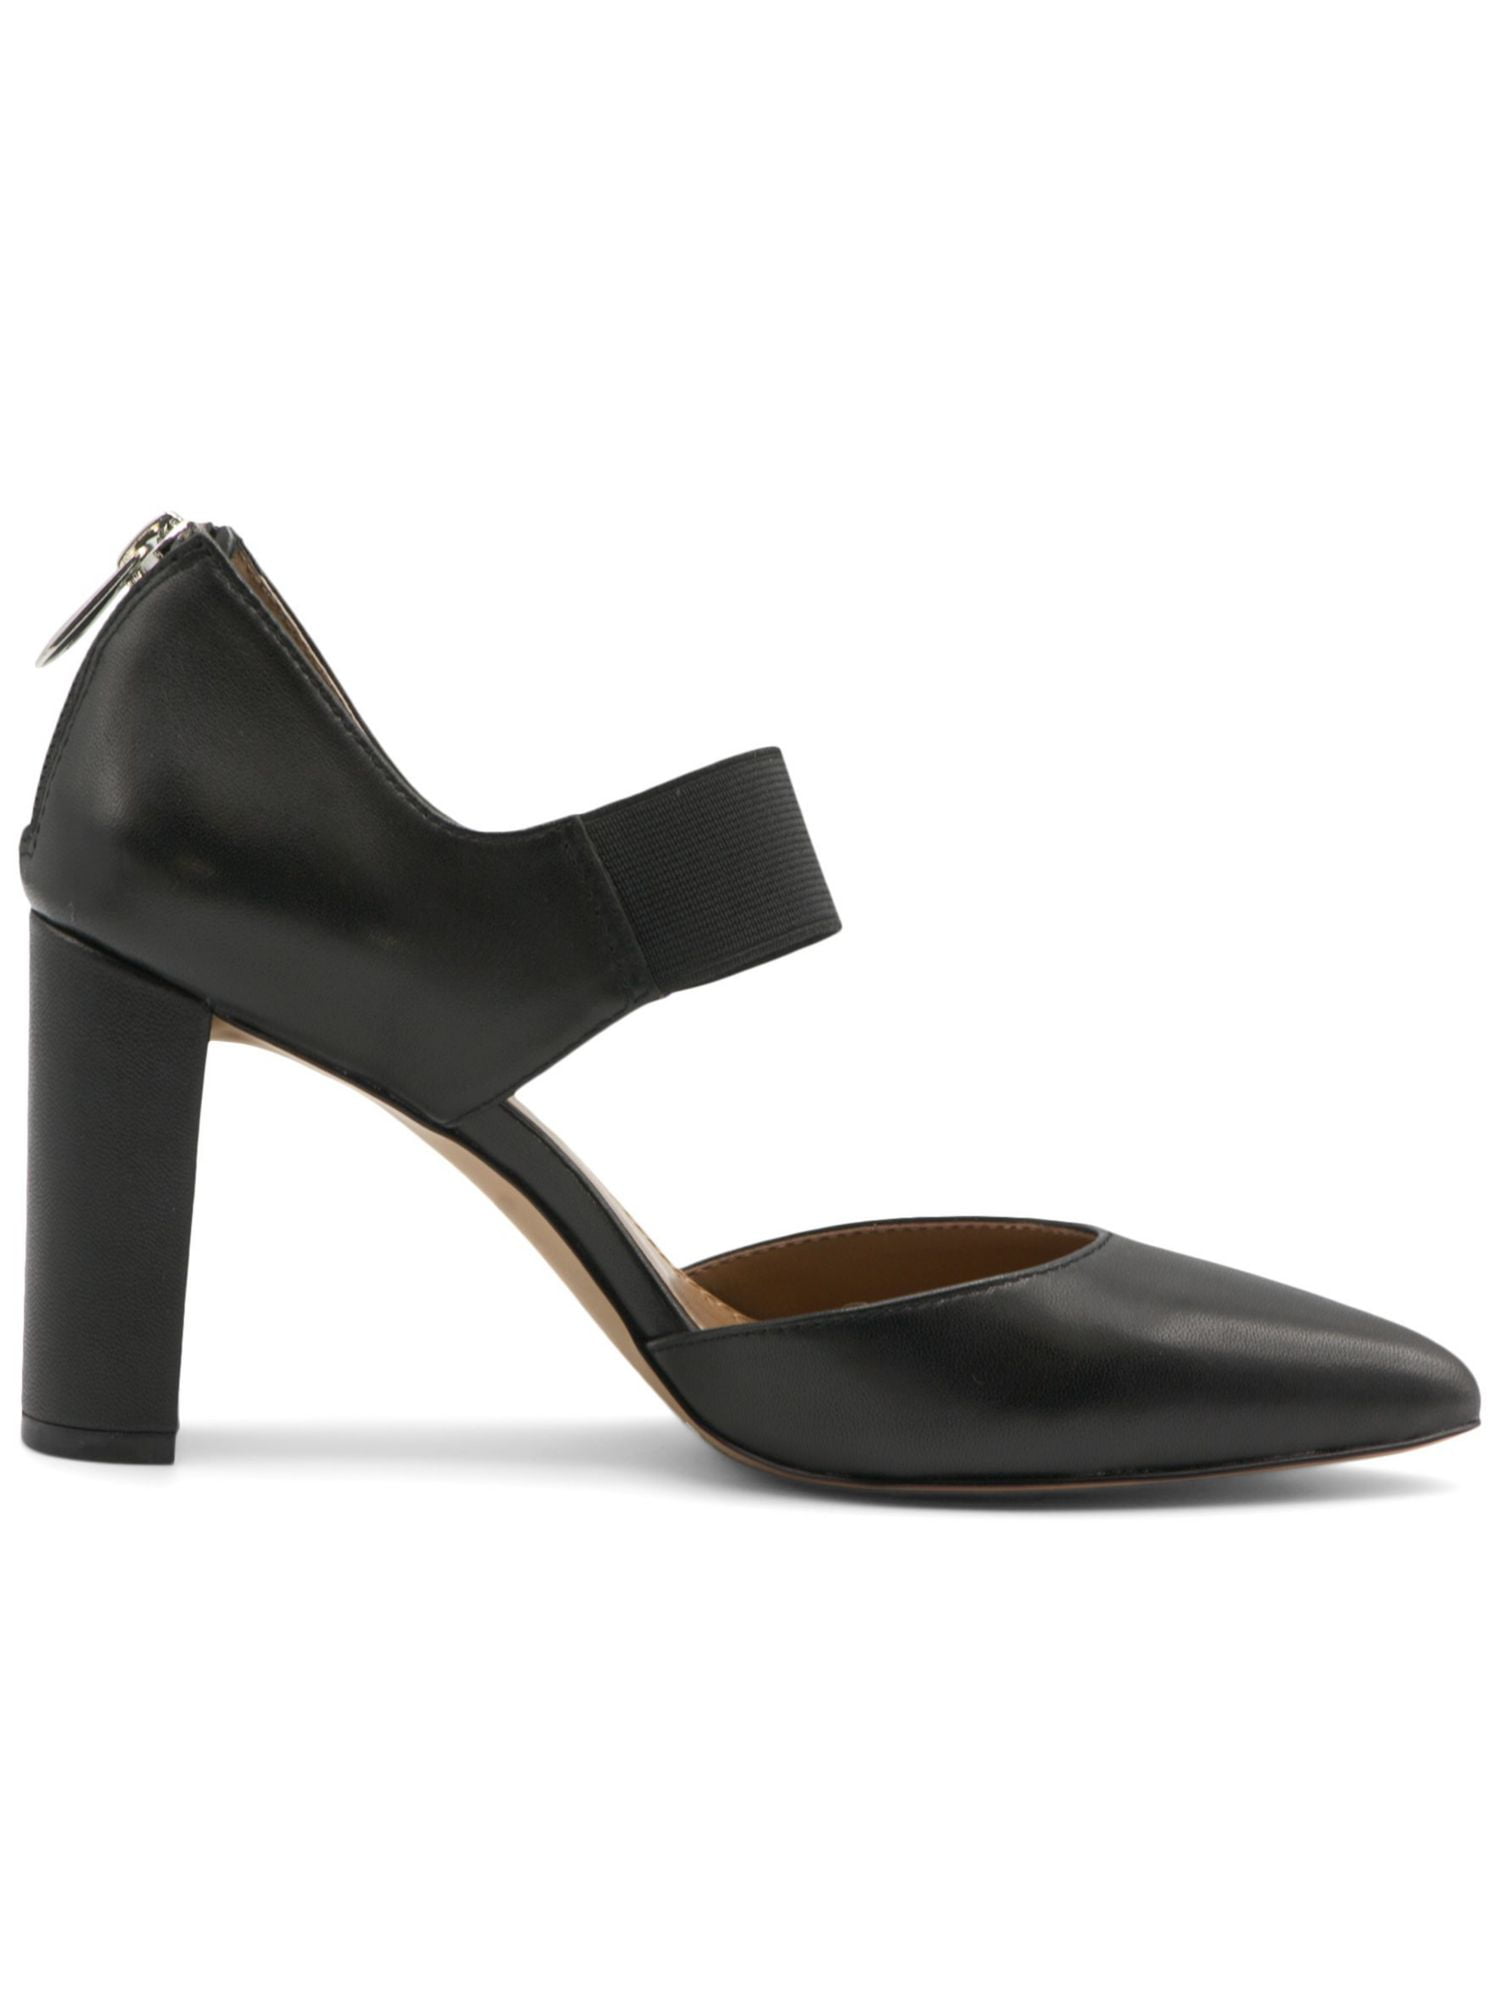 ADRIENNE VITTADINI Women's Sport Carry platform Black Sandal Size 8.5 -  Prime Shoes and More